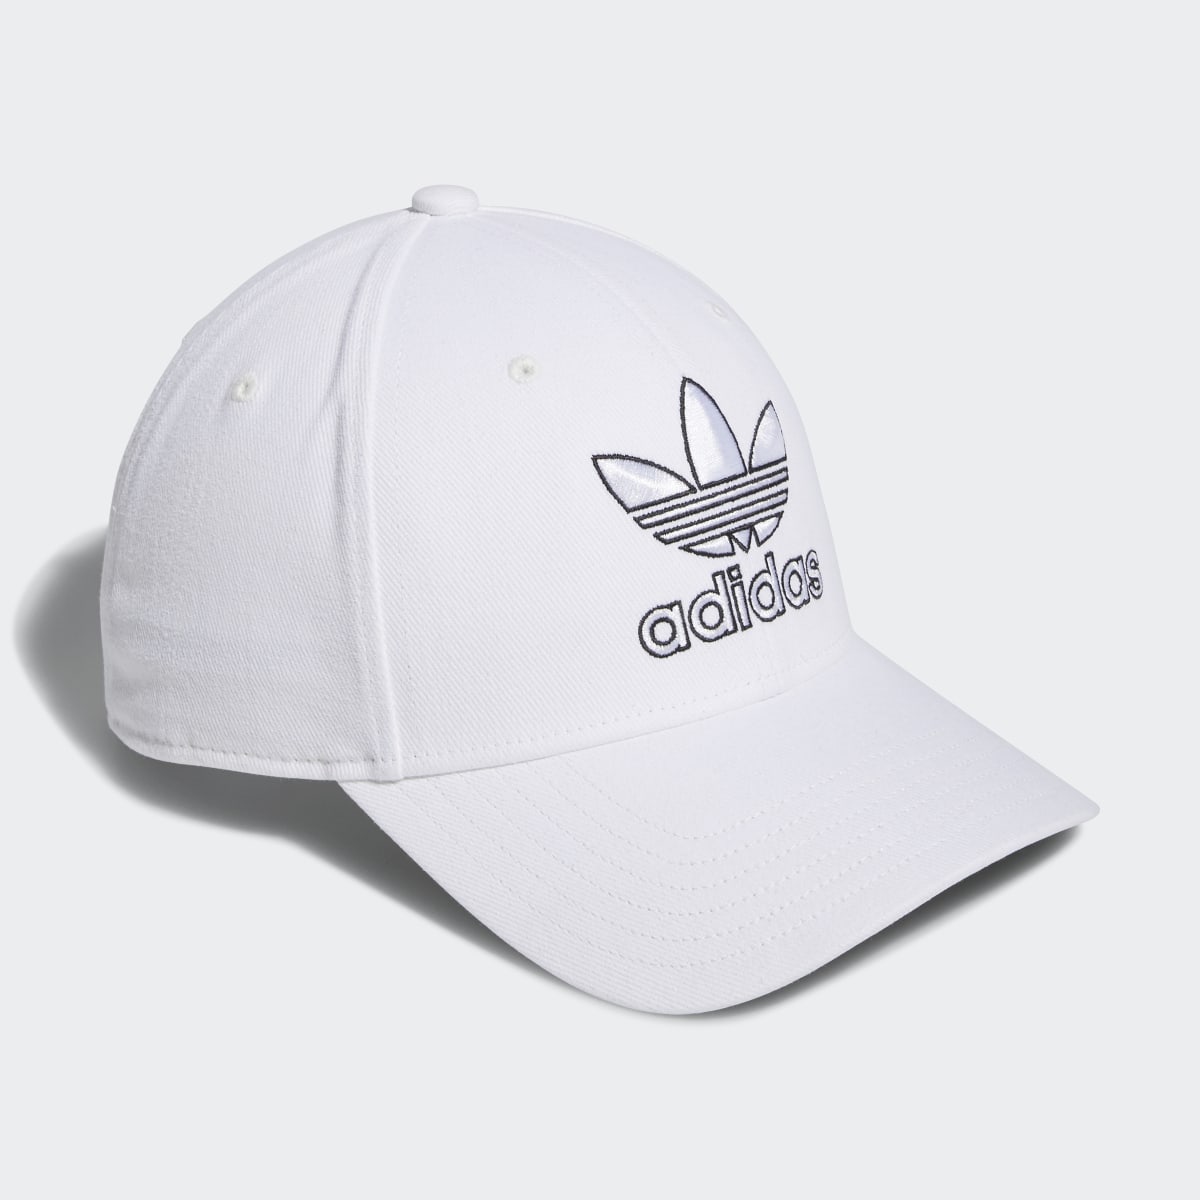 Adidas Icon Snapback Hat. 4